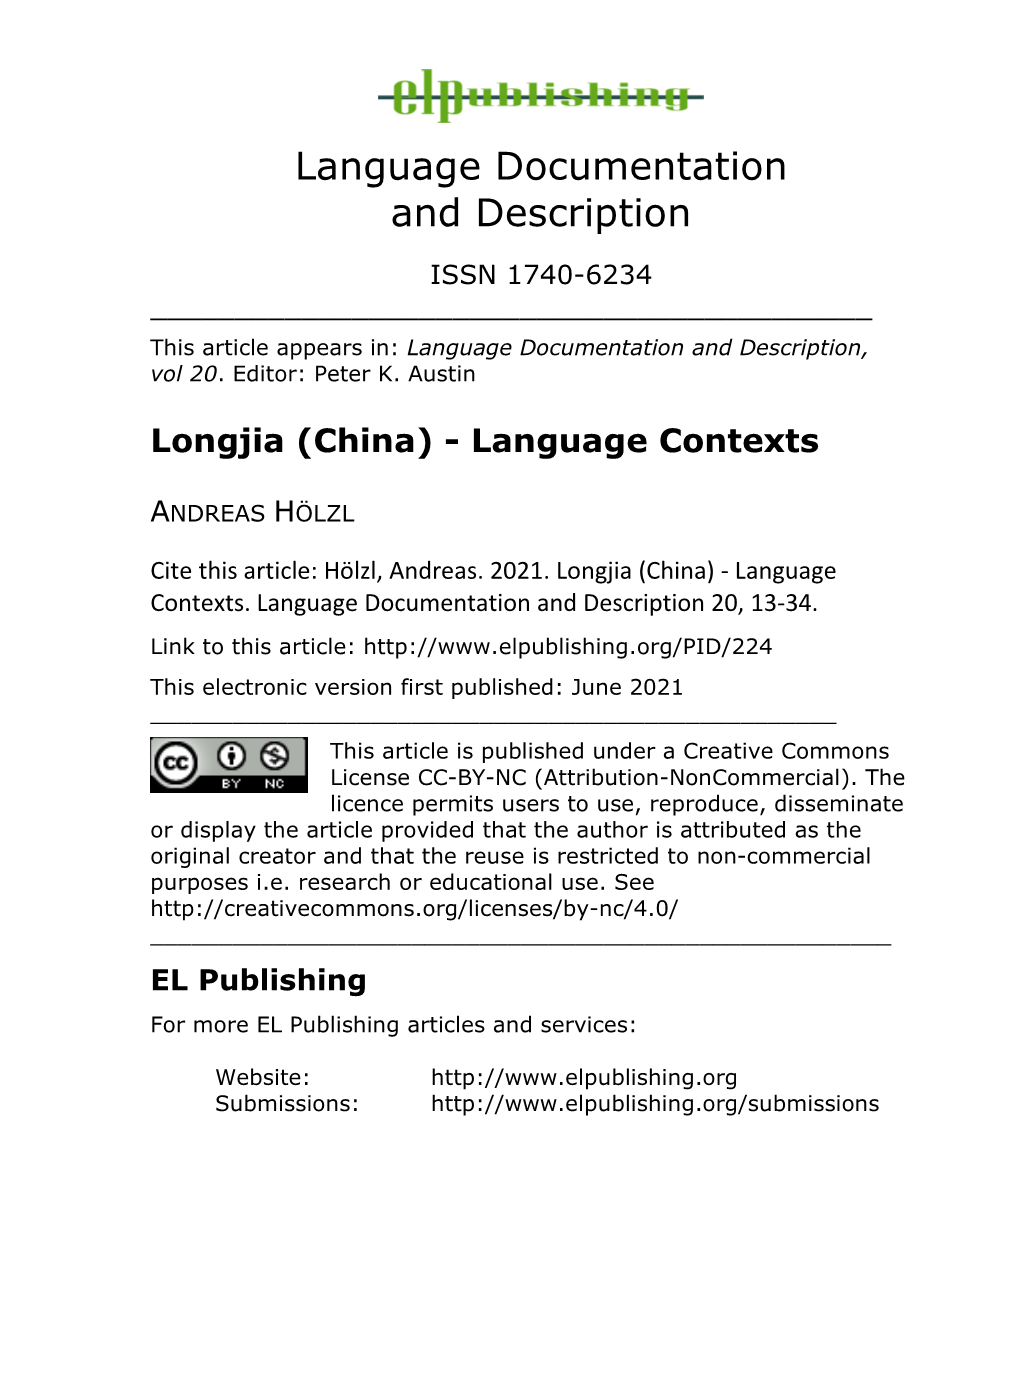 Longjia (China) - Language Contexts